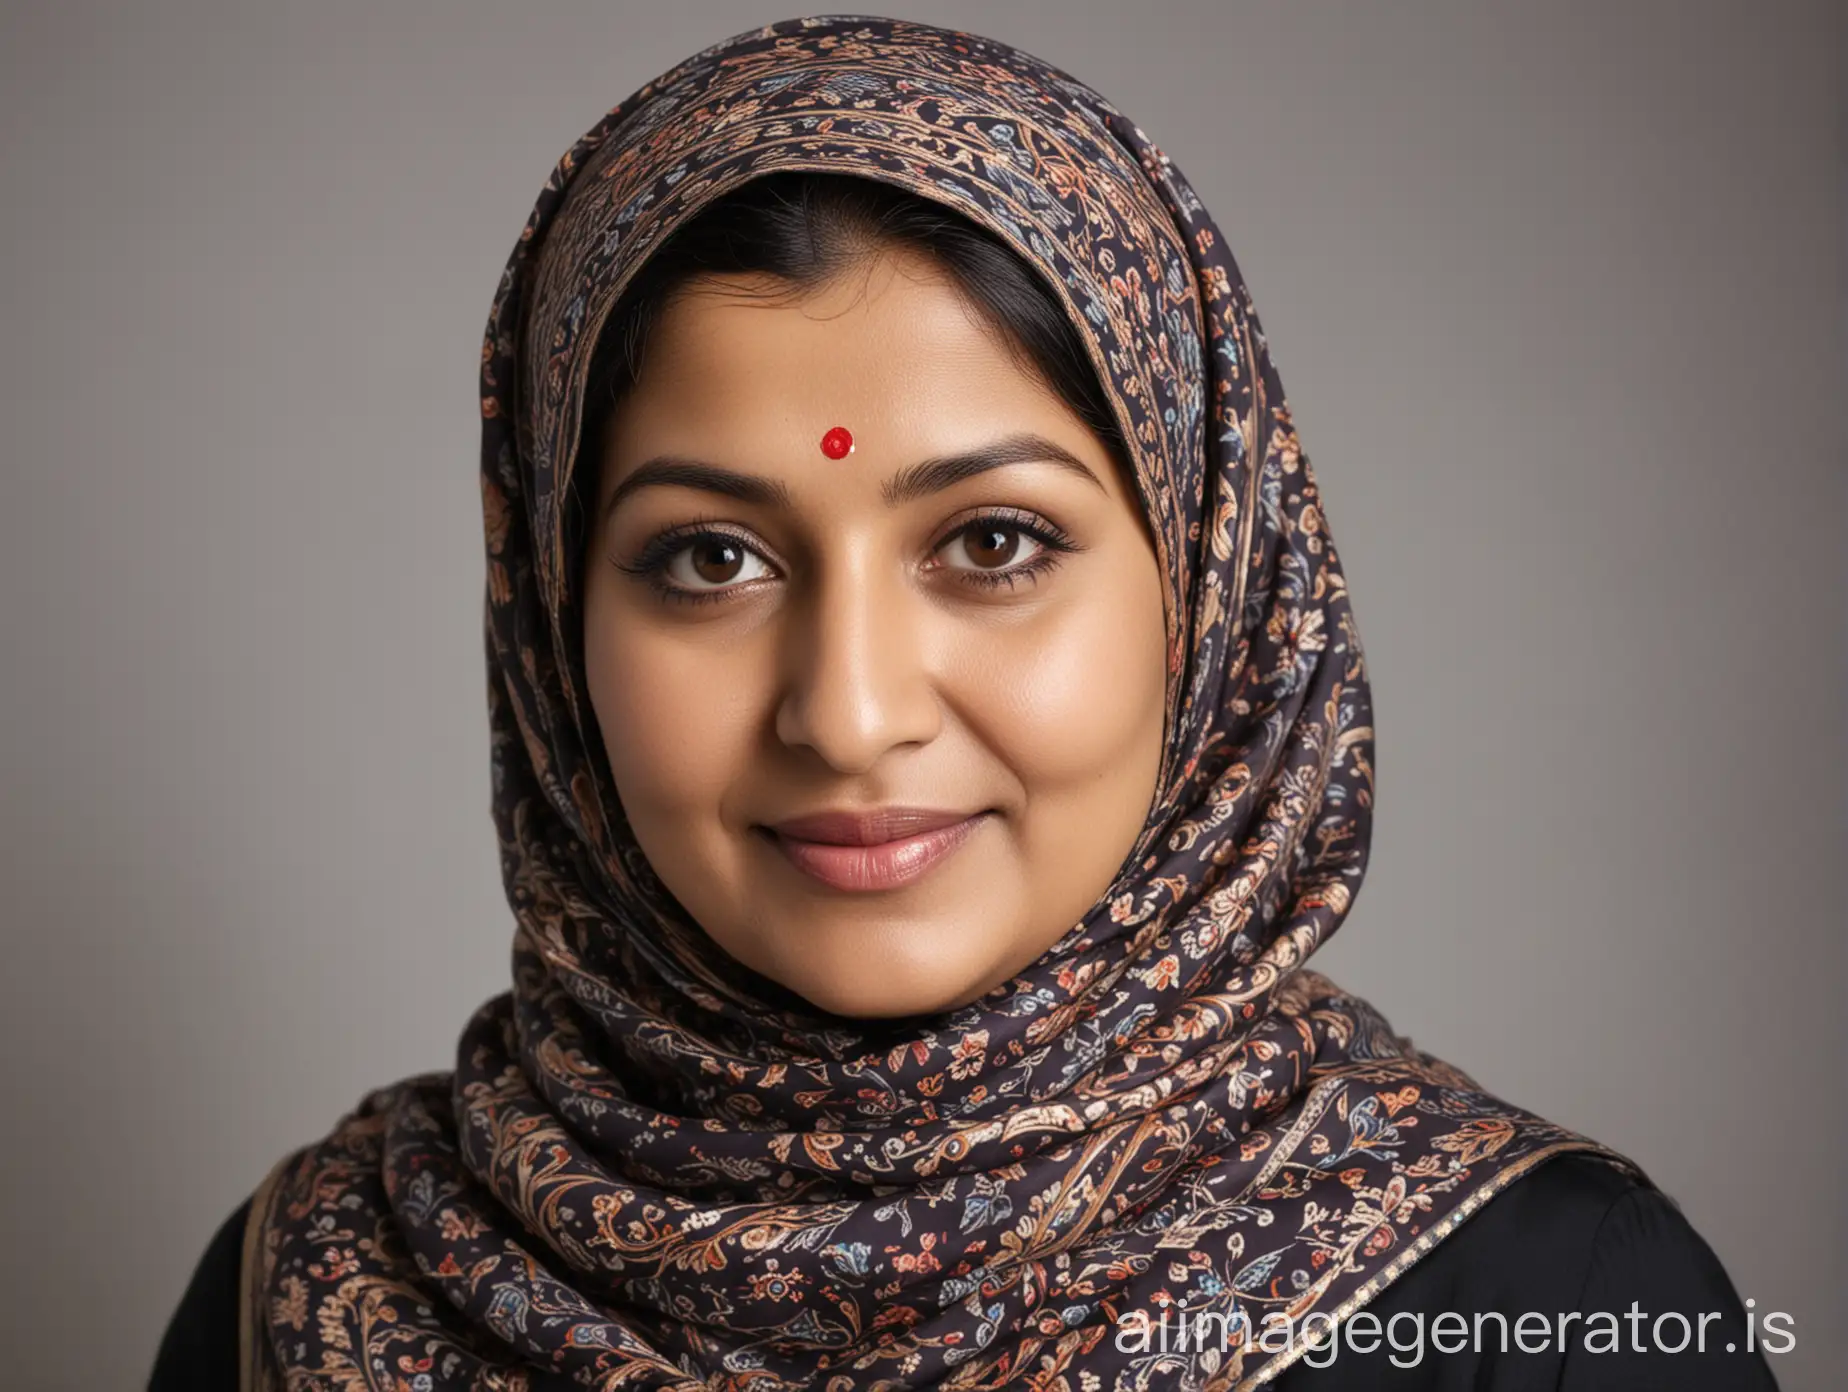 Elegant-Indian-Muslim-Woman-in-Traditional-Headscarf